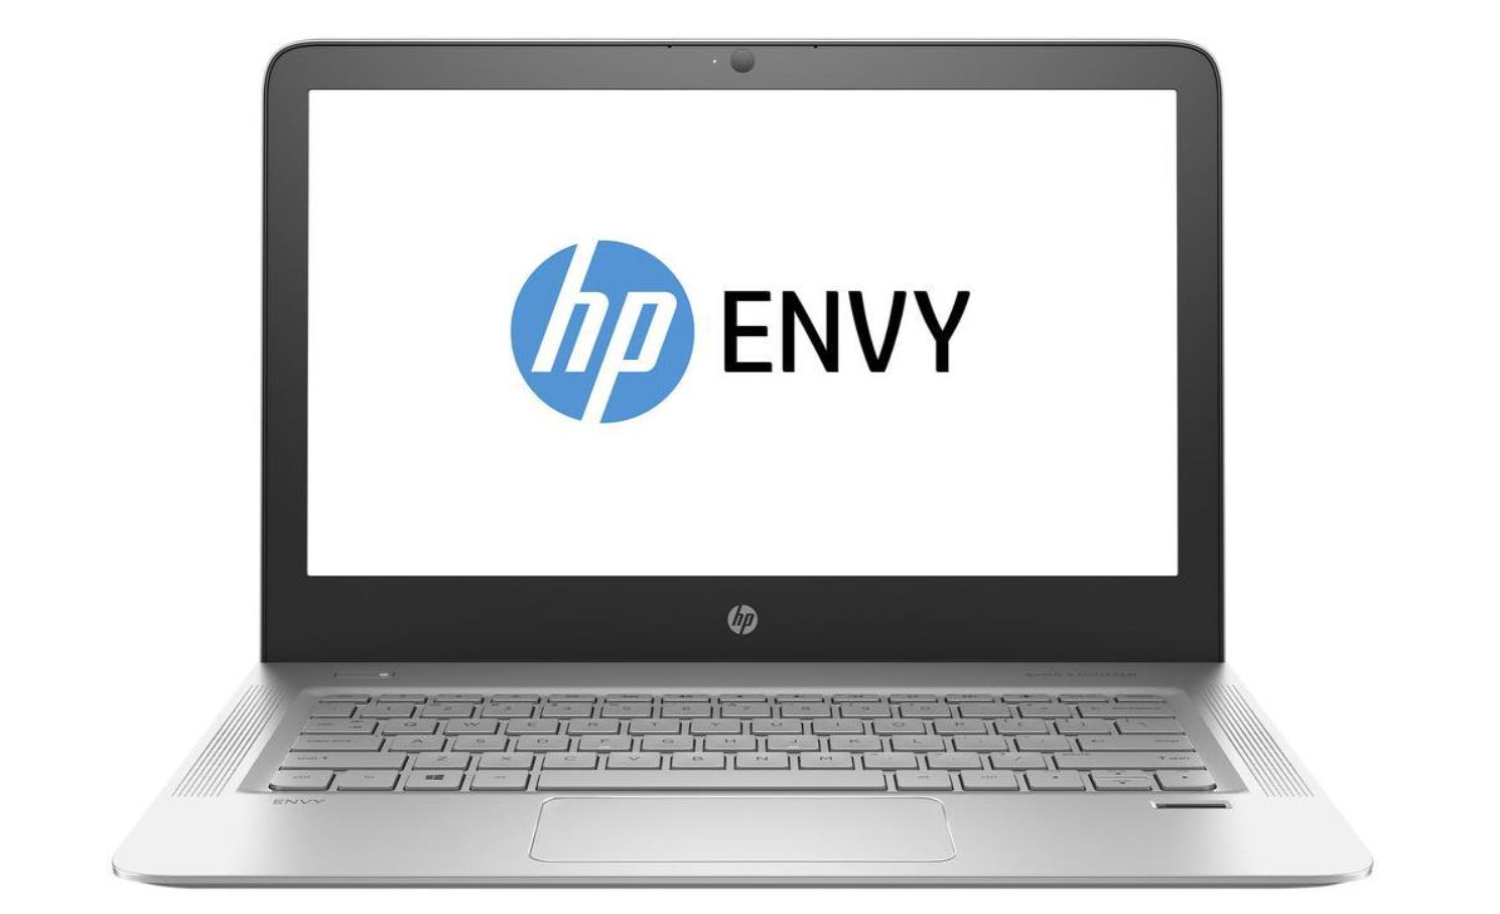 HP Envy Notebook Intel Core i5 6th Gen 8GB RAM 128GB SSD Windows 10 Home